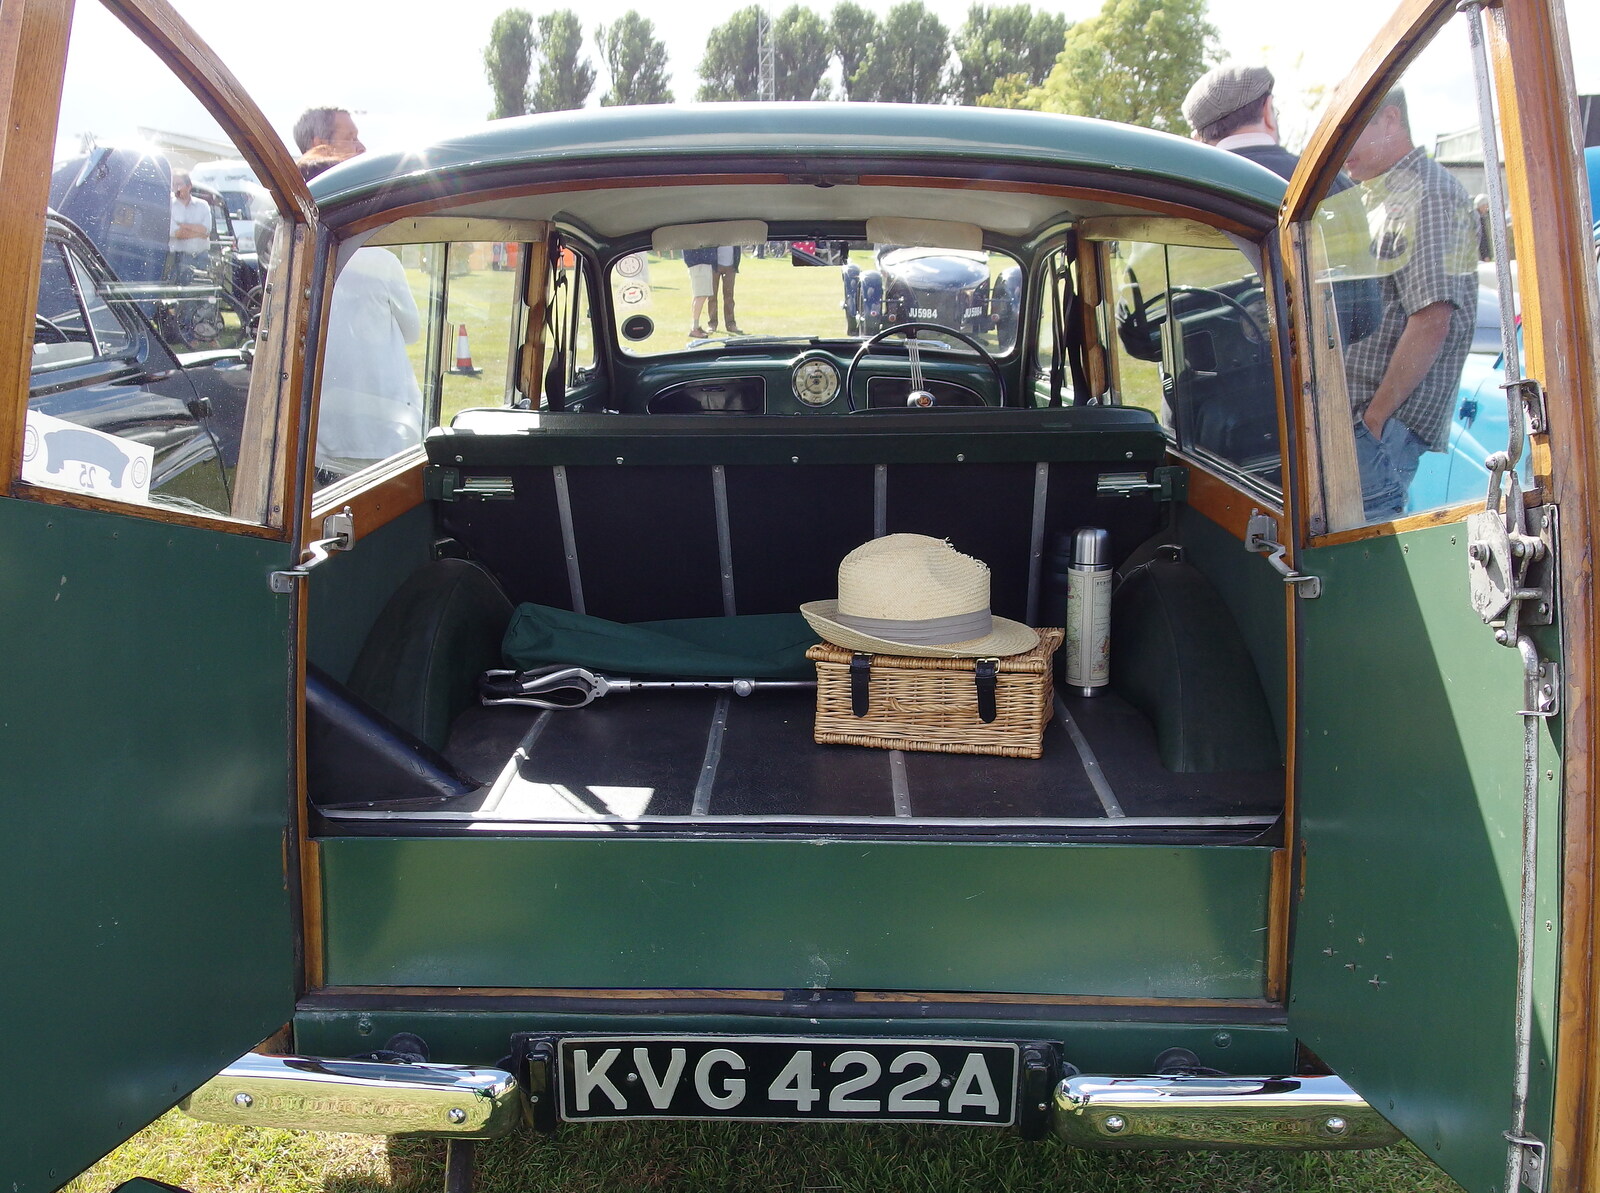 The back of a Morris Traveller from Stradbroke Classic Car Show, Stradbroke, Suffolk - 7th September 2013